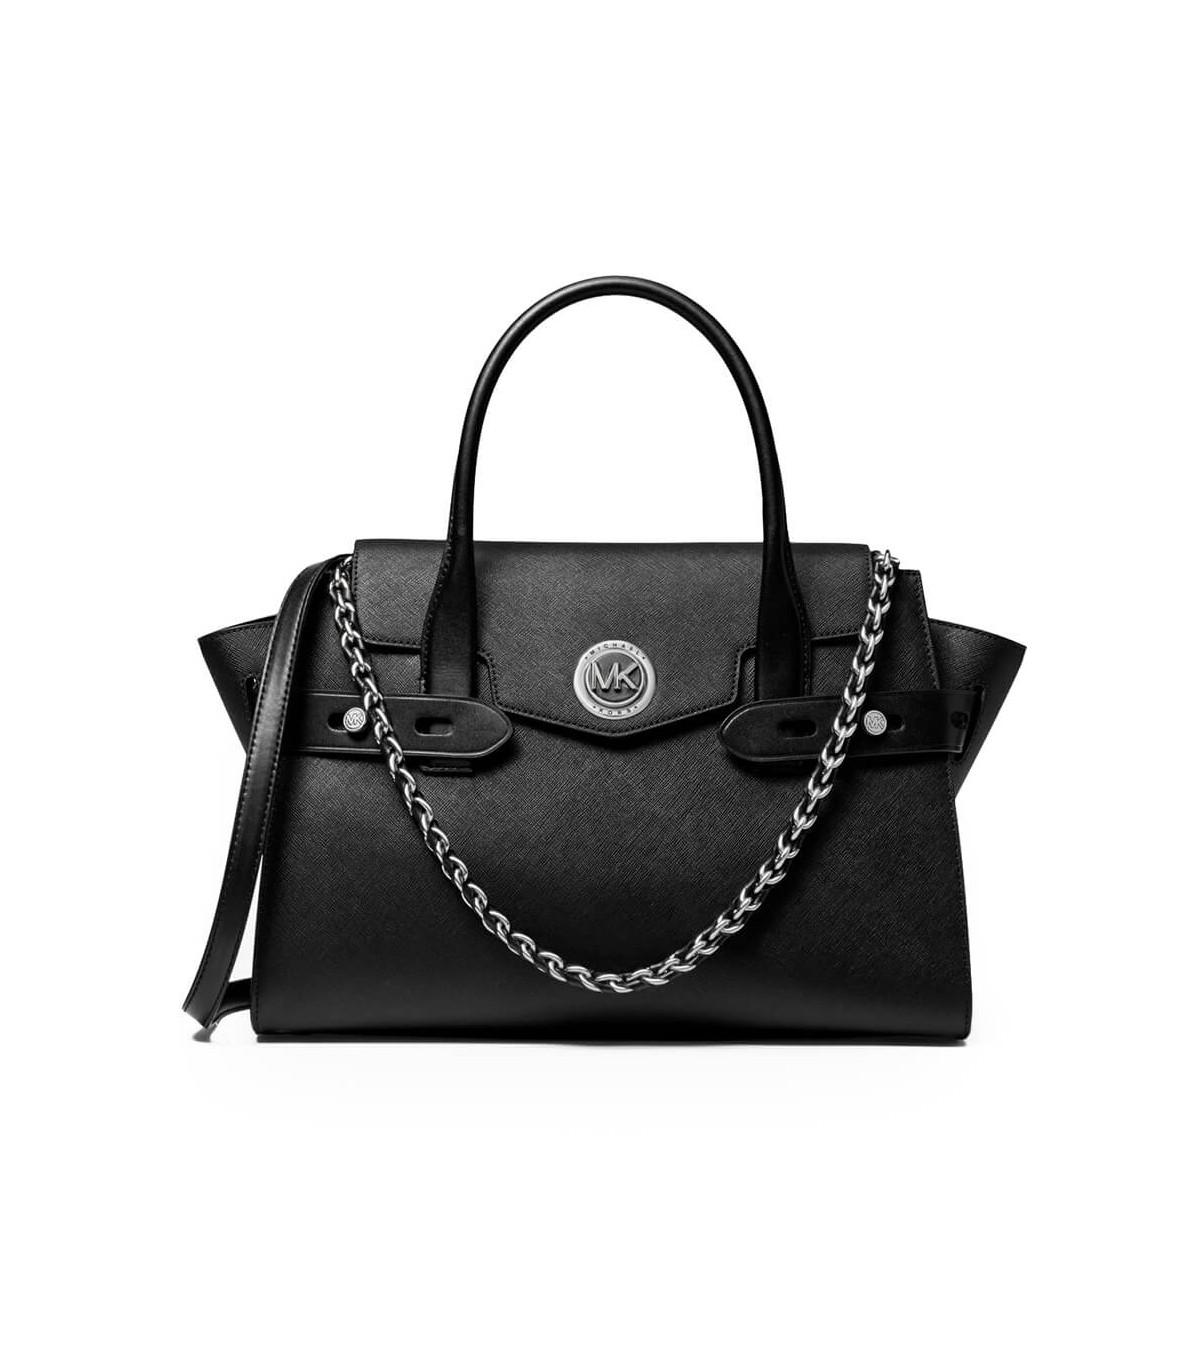 Michael Kors Leather Carmen Large Black Handbag - Lyst